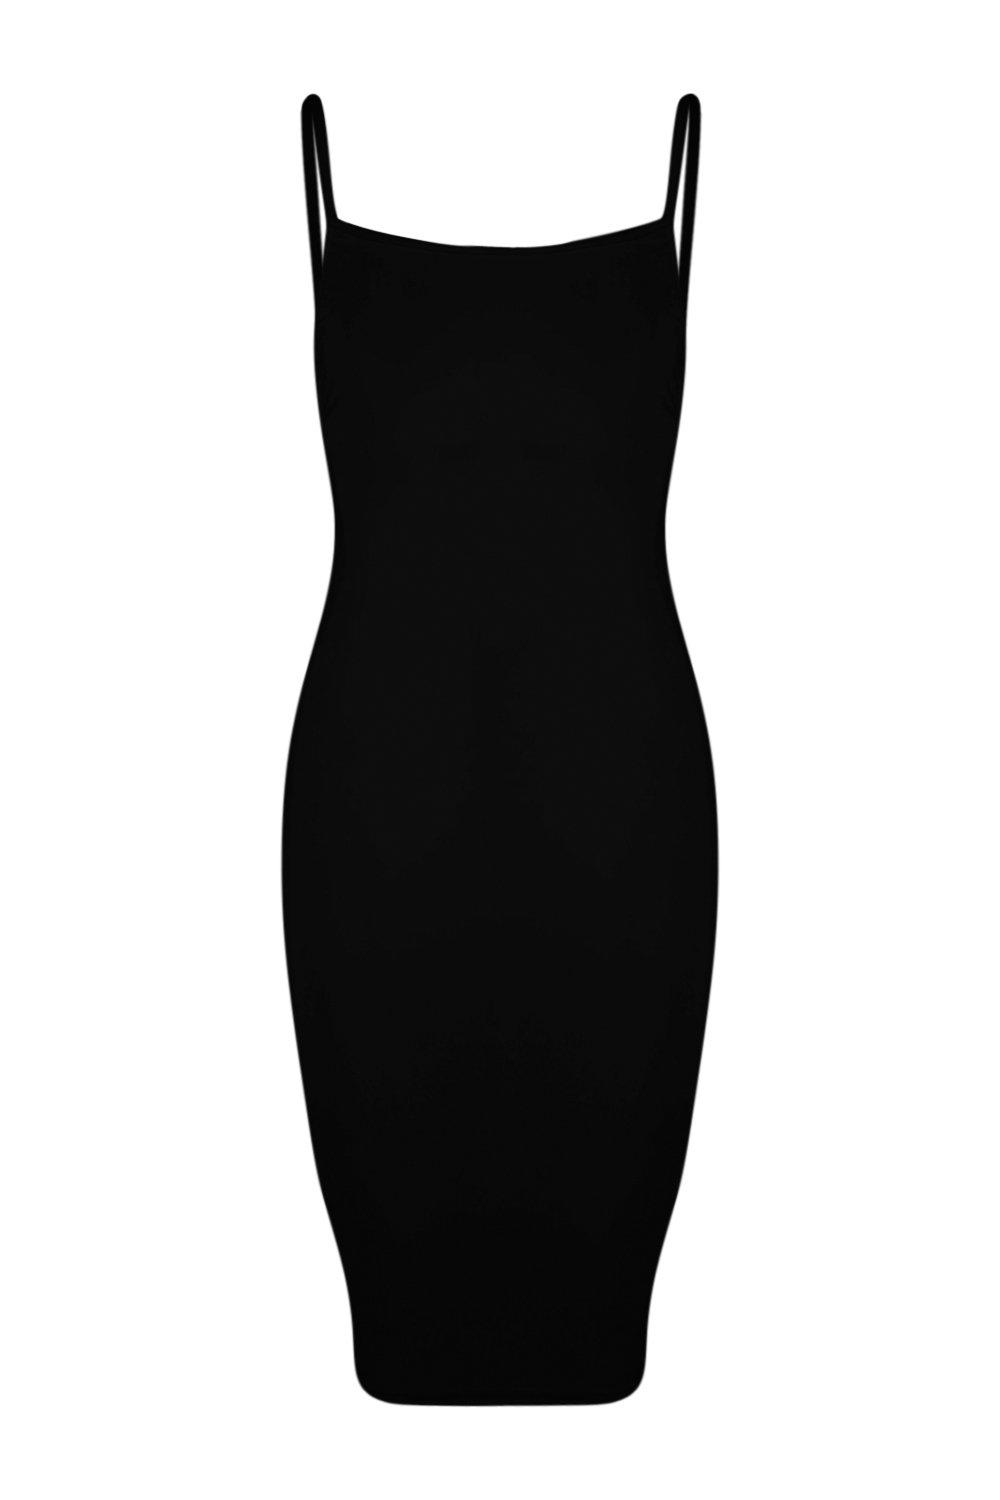 Boohoo Womens Petite Renee Backless Strappy Bodycon Dress | eBay